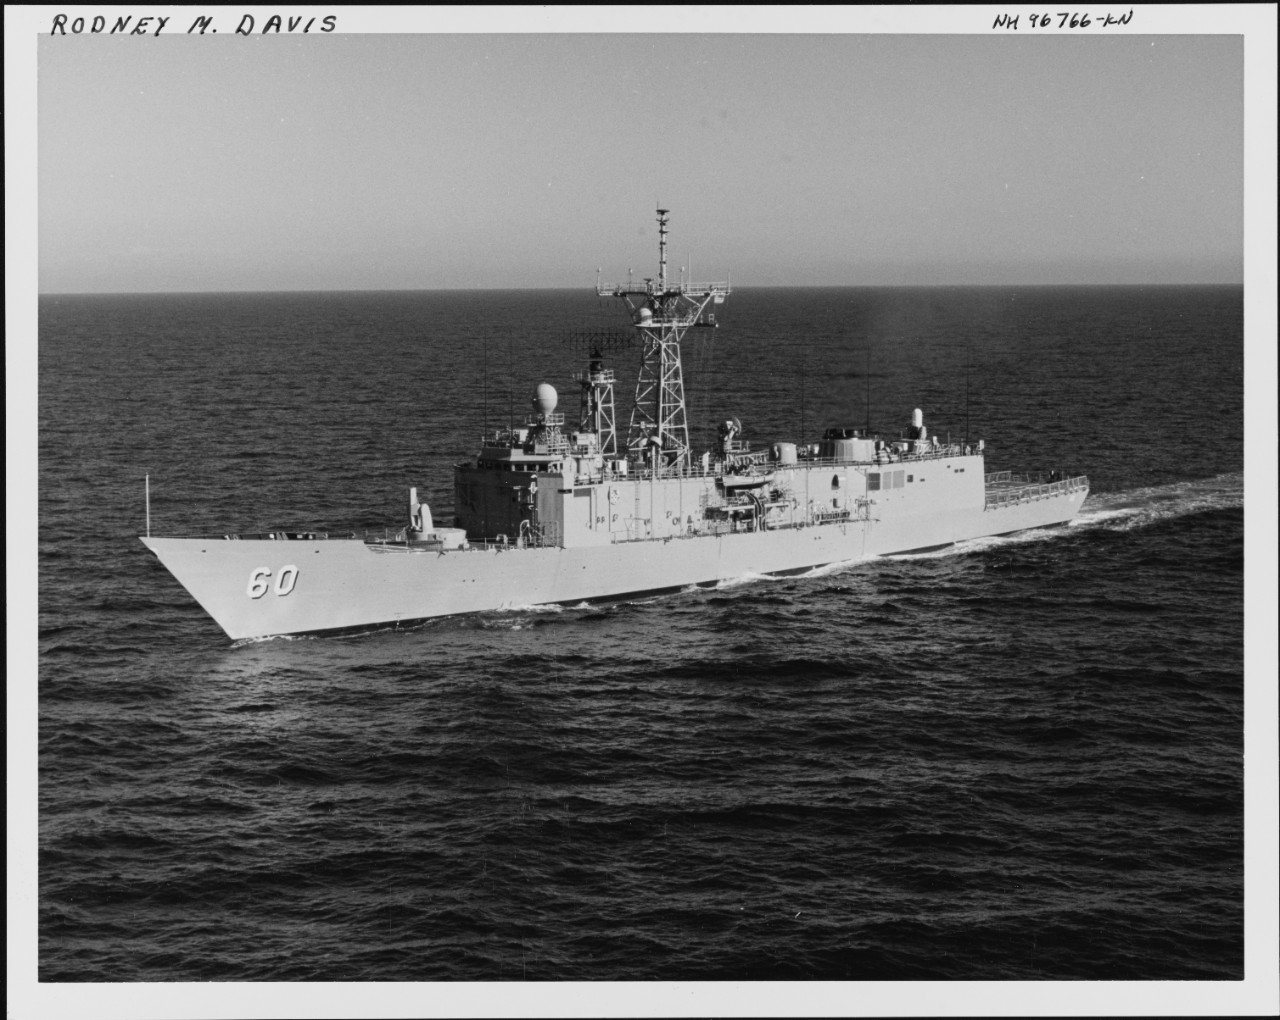 Photo #: NH 96766-KN (Color)  USS Rodney M. Davis (FFG-60)